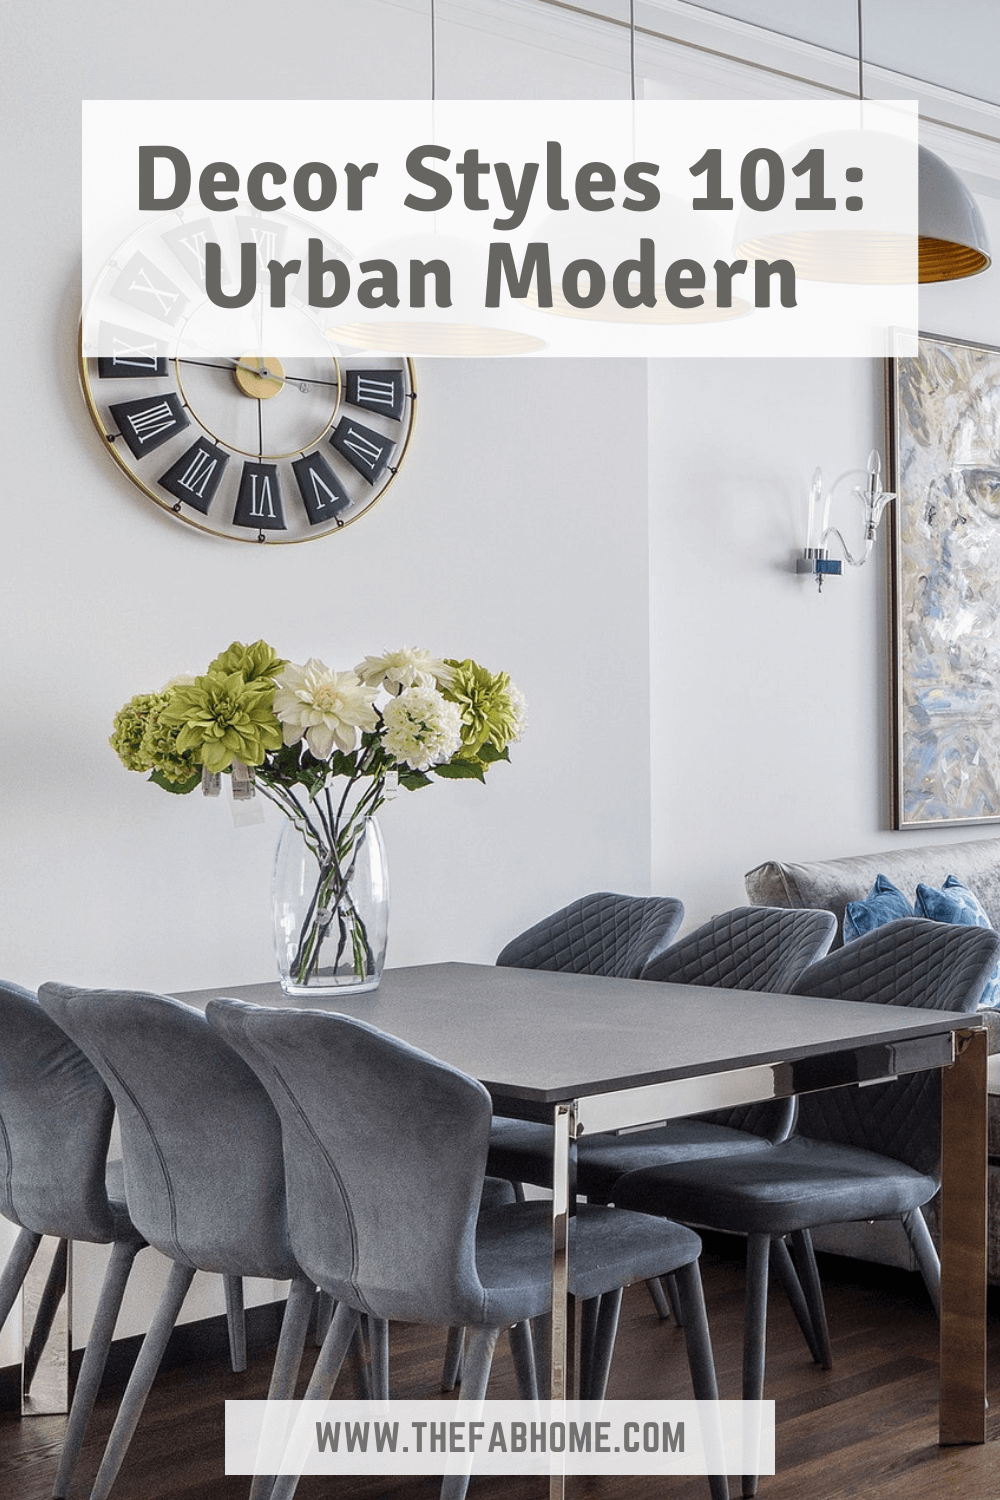 Decor Styles 101: Urban Modern